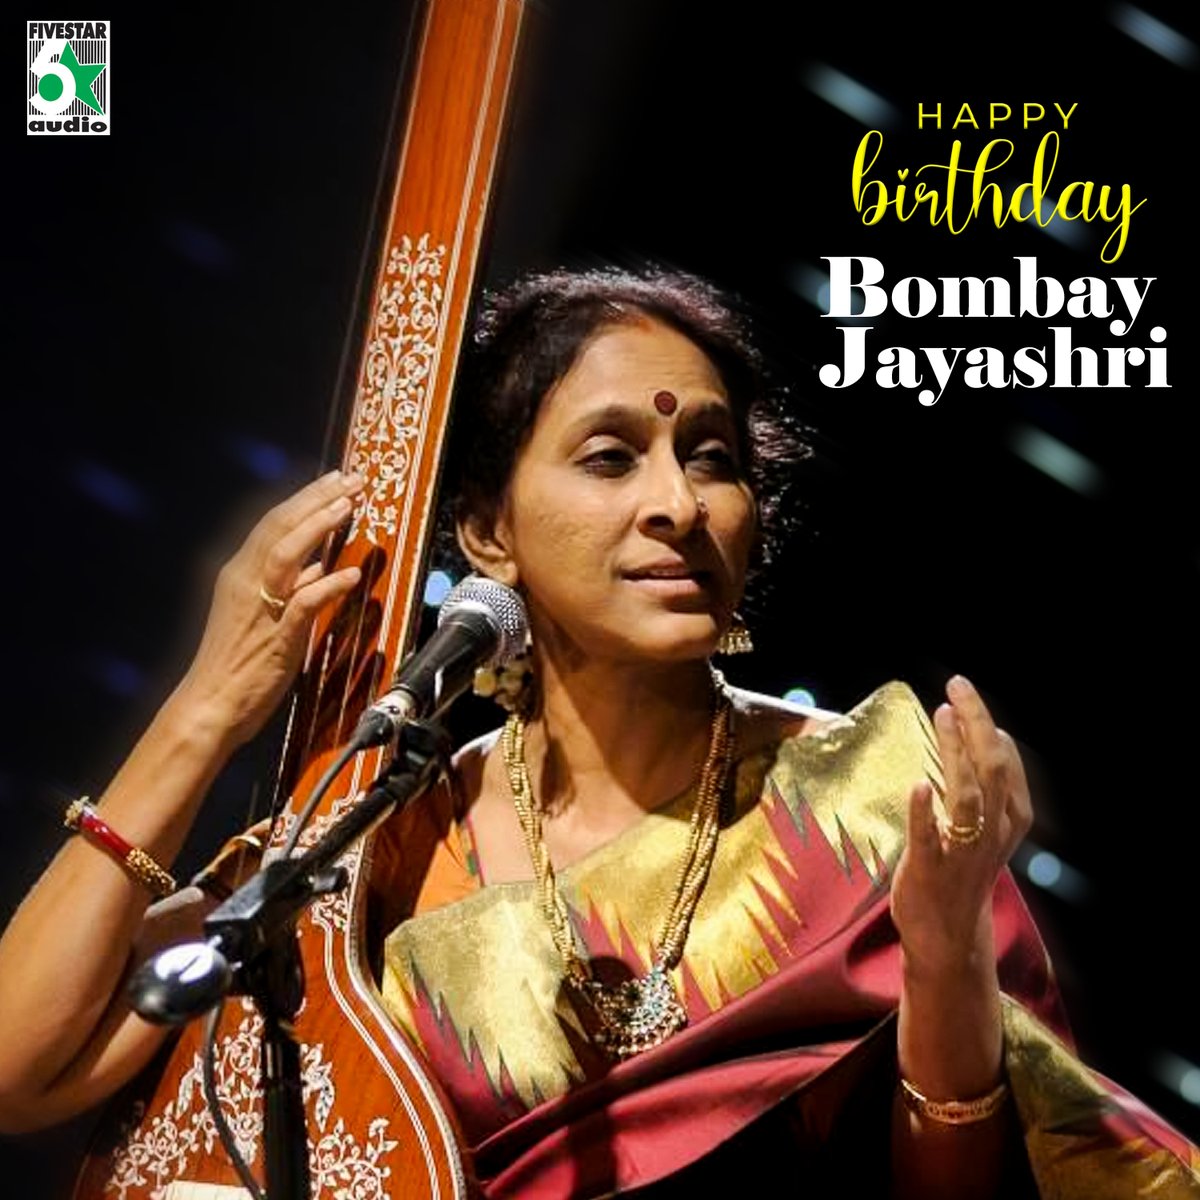 Wish You Happy Birthday Bombay Jayashri

youtu.be/5YVYoOsIpIM?si…

#hbdbombayjayashri #Fivestaraudio #bombayjayashri